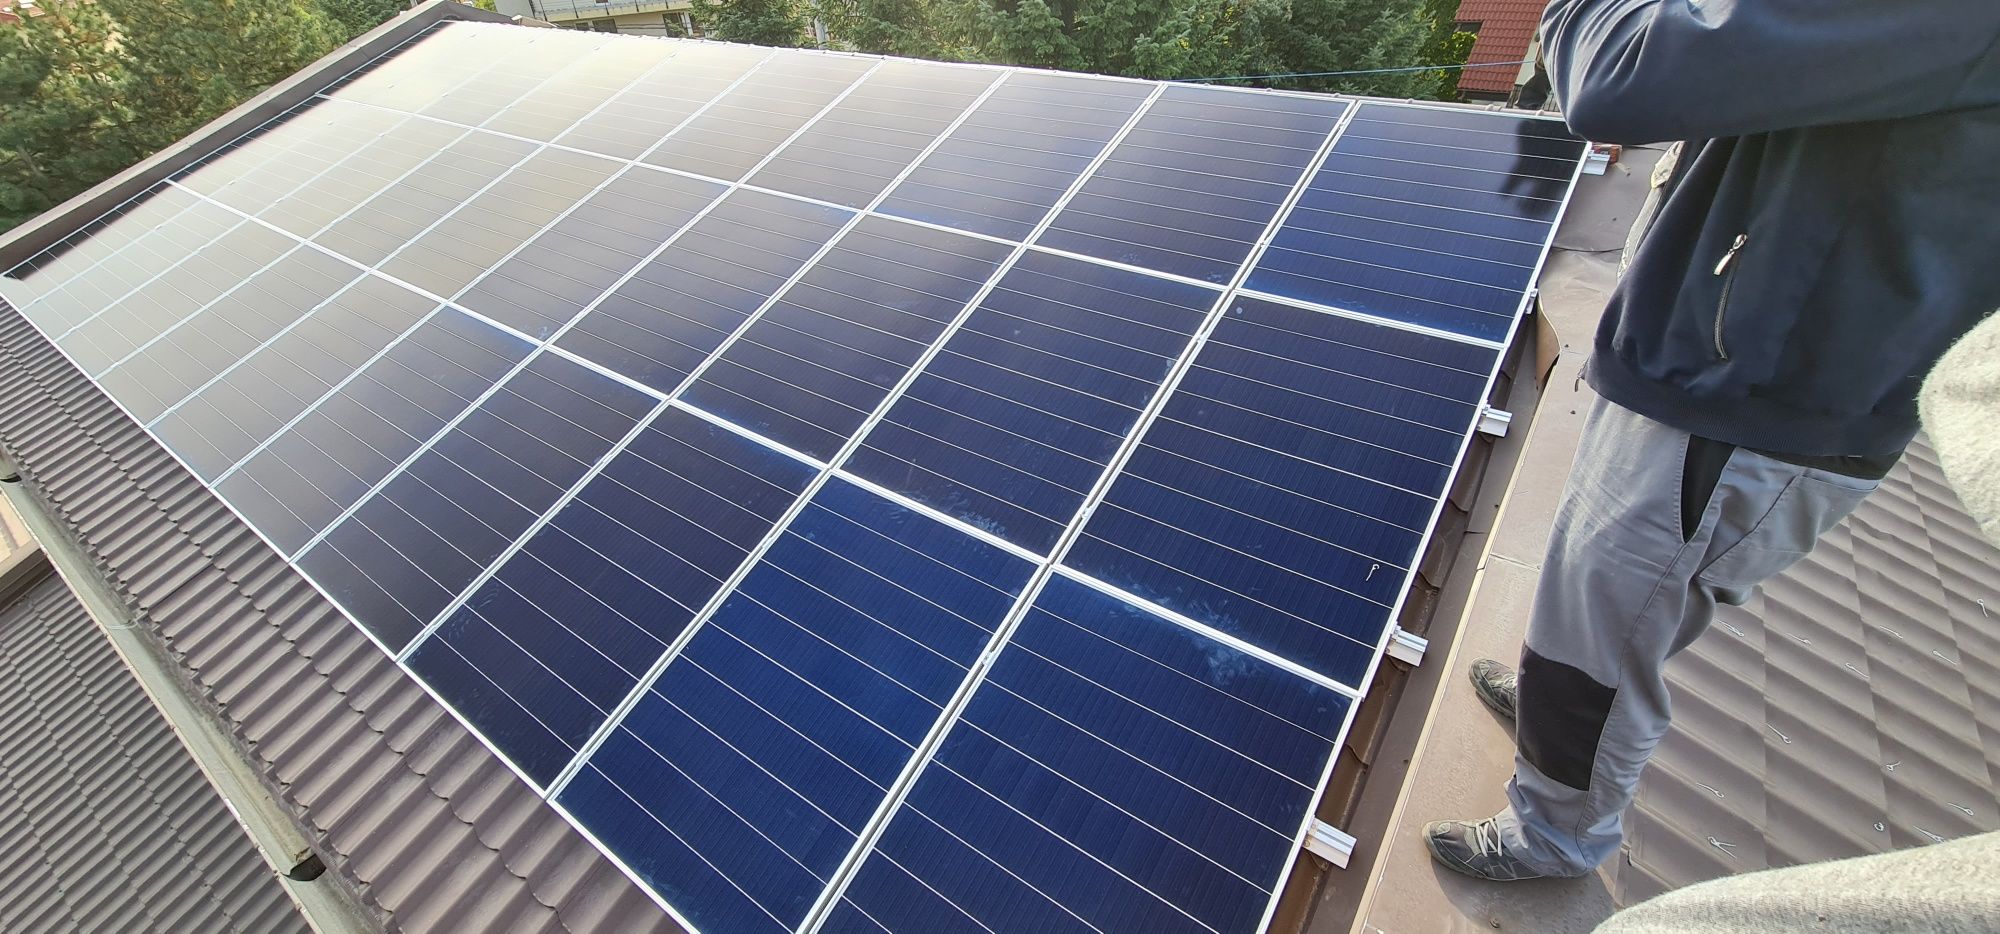 Monaj panouri solare fotovoltaice prosumator inverter on gred litiuion